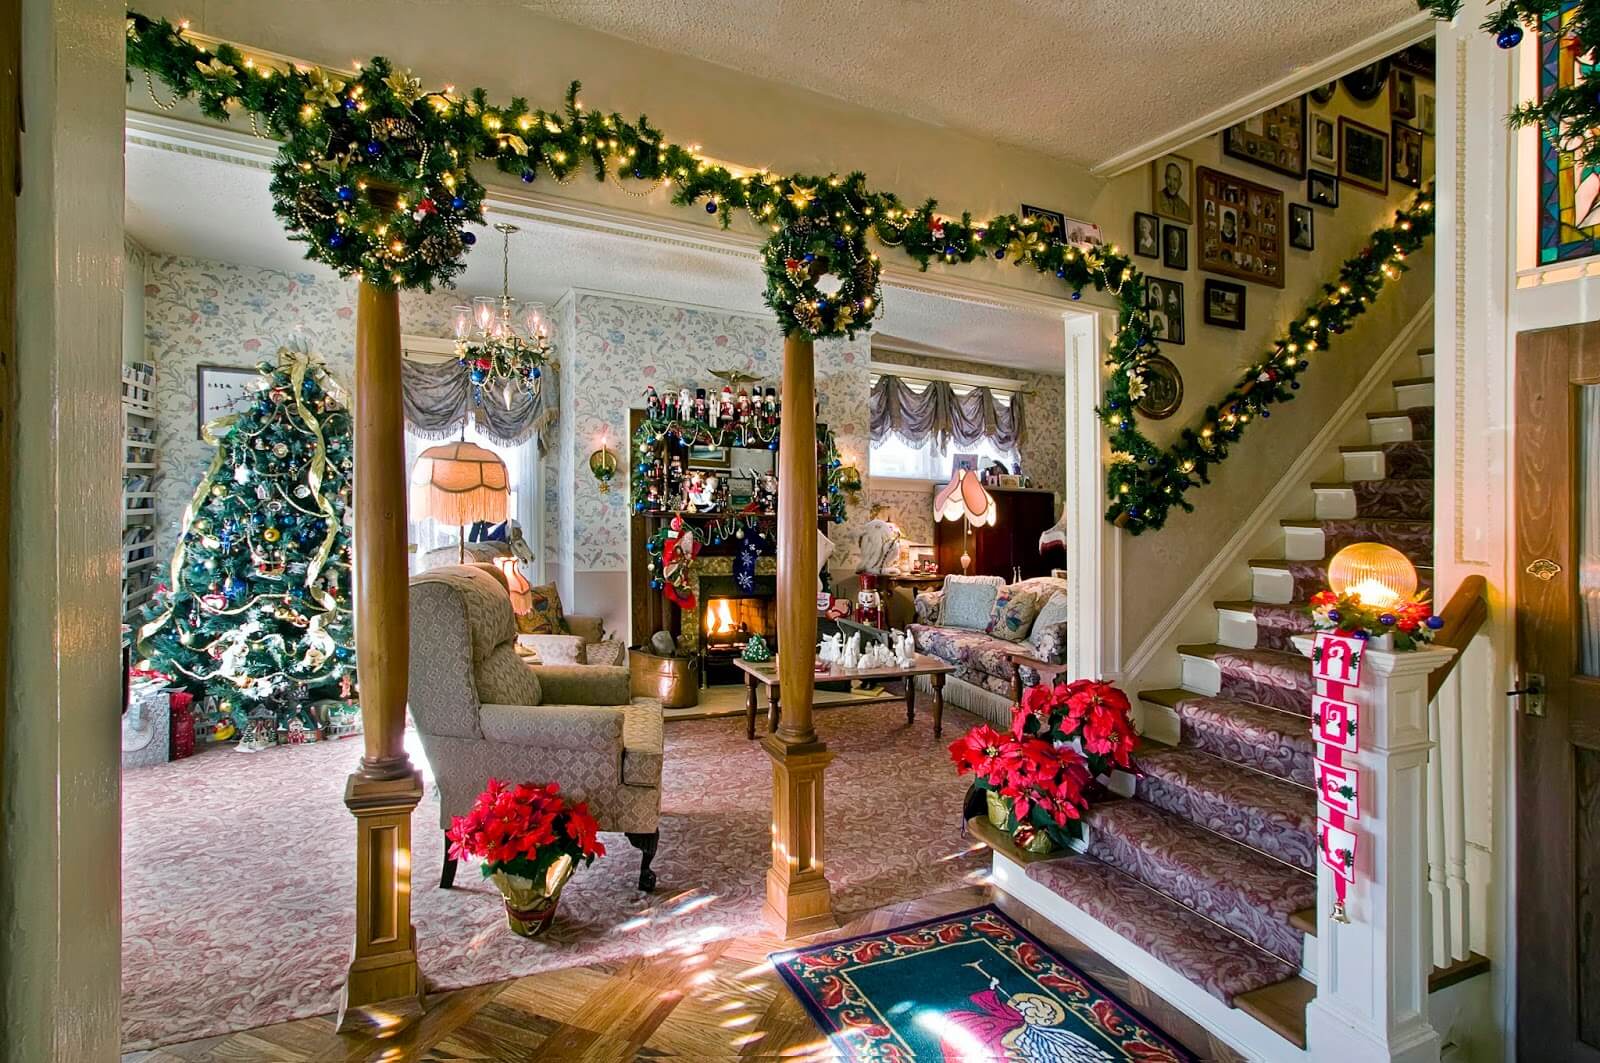 Top 50 Christmas House Decorations Inside - Home Decor ...